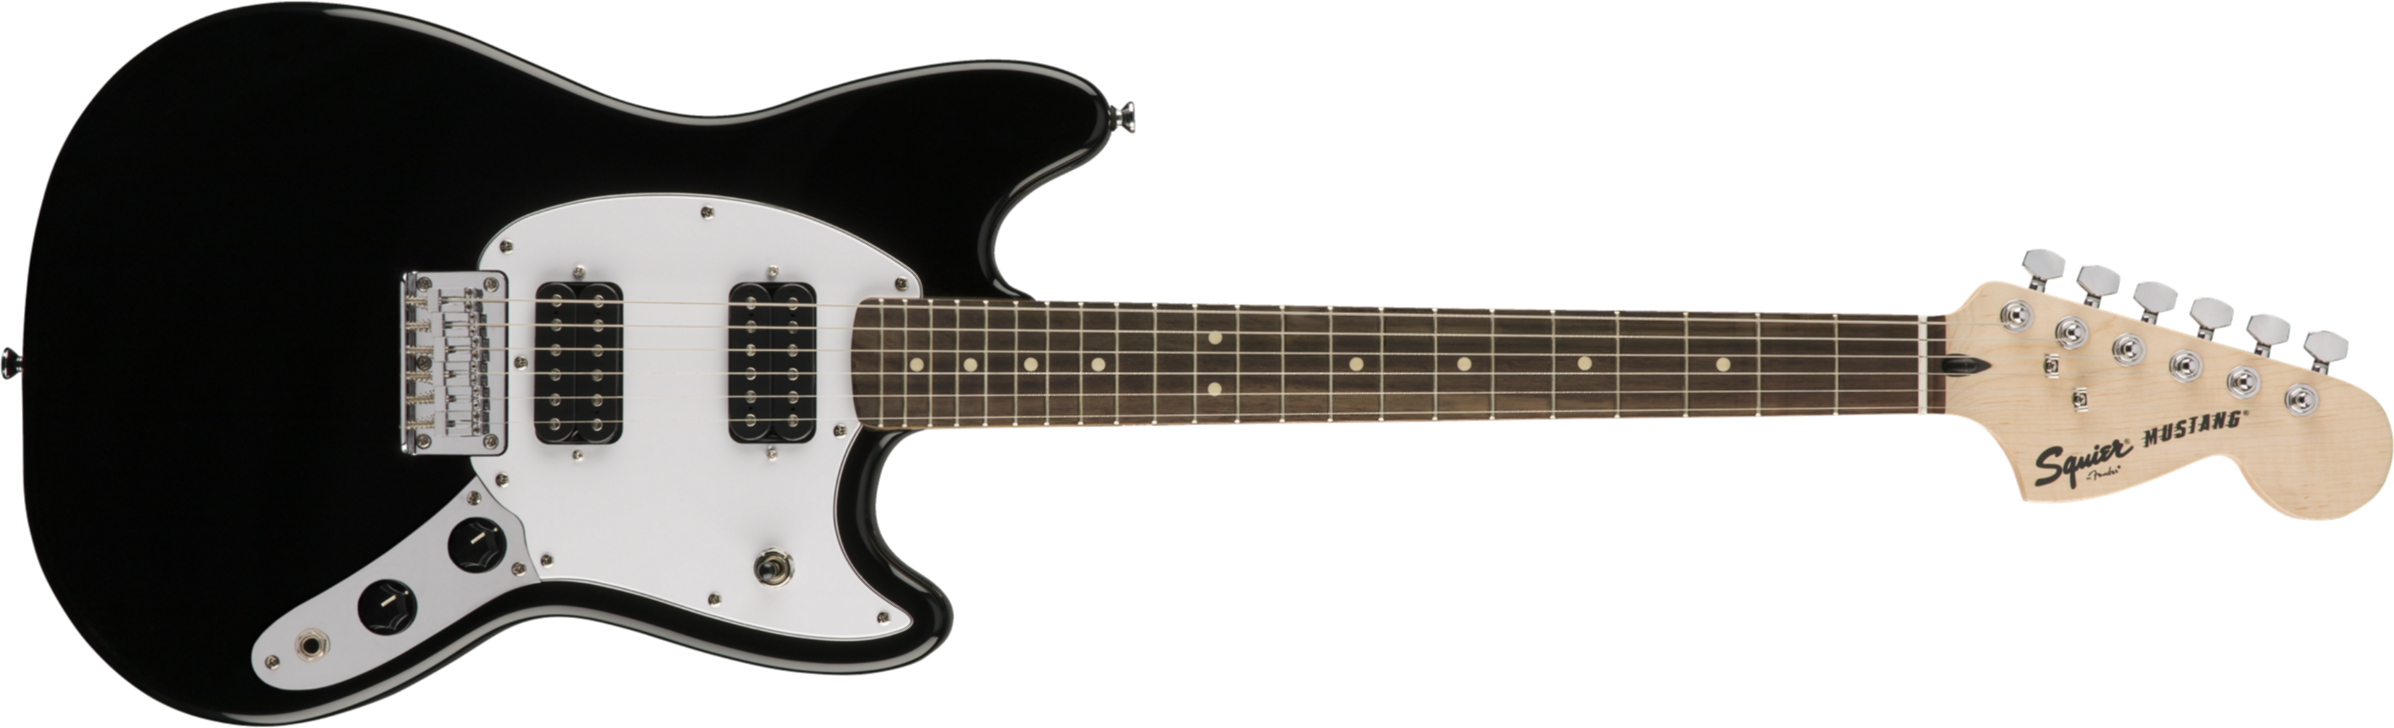 Squier Mustang Bullet Hh 2019 Ht Lau - Black - Retro rock electric guitar - Main picture